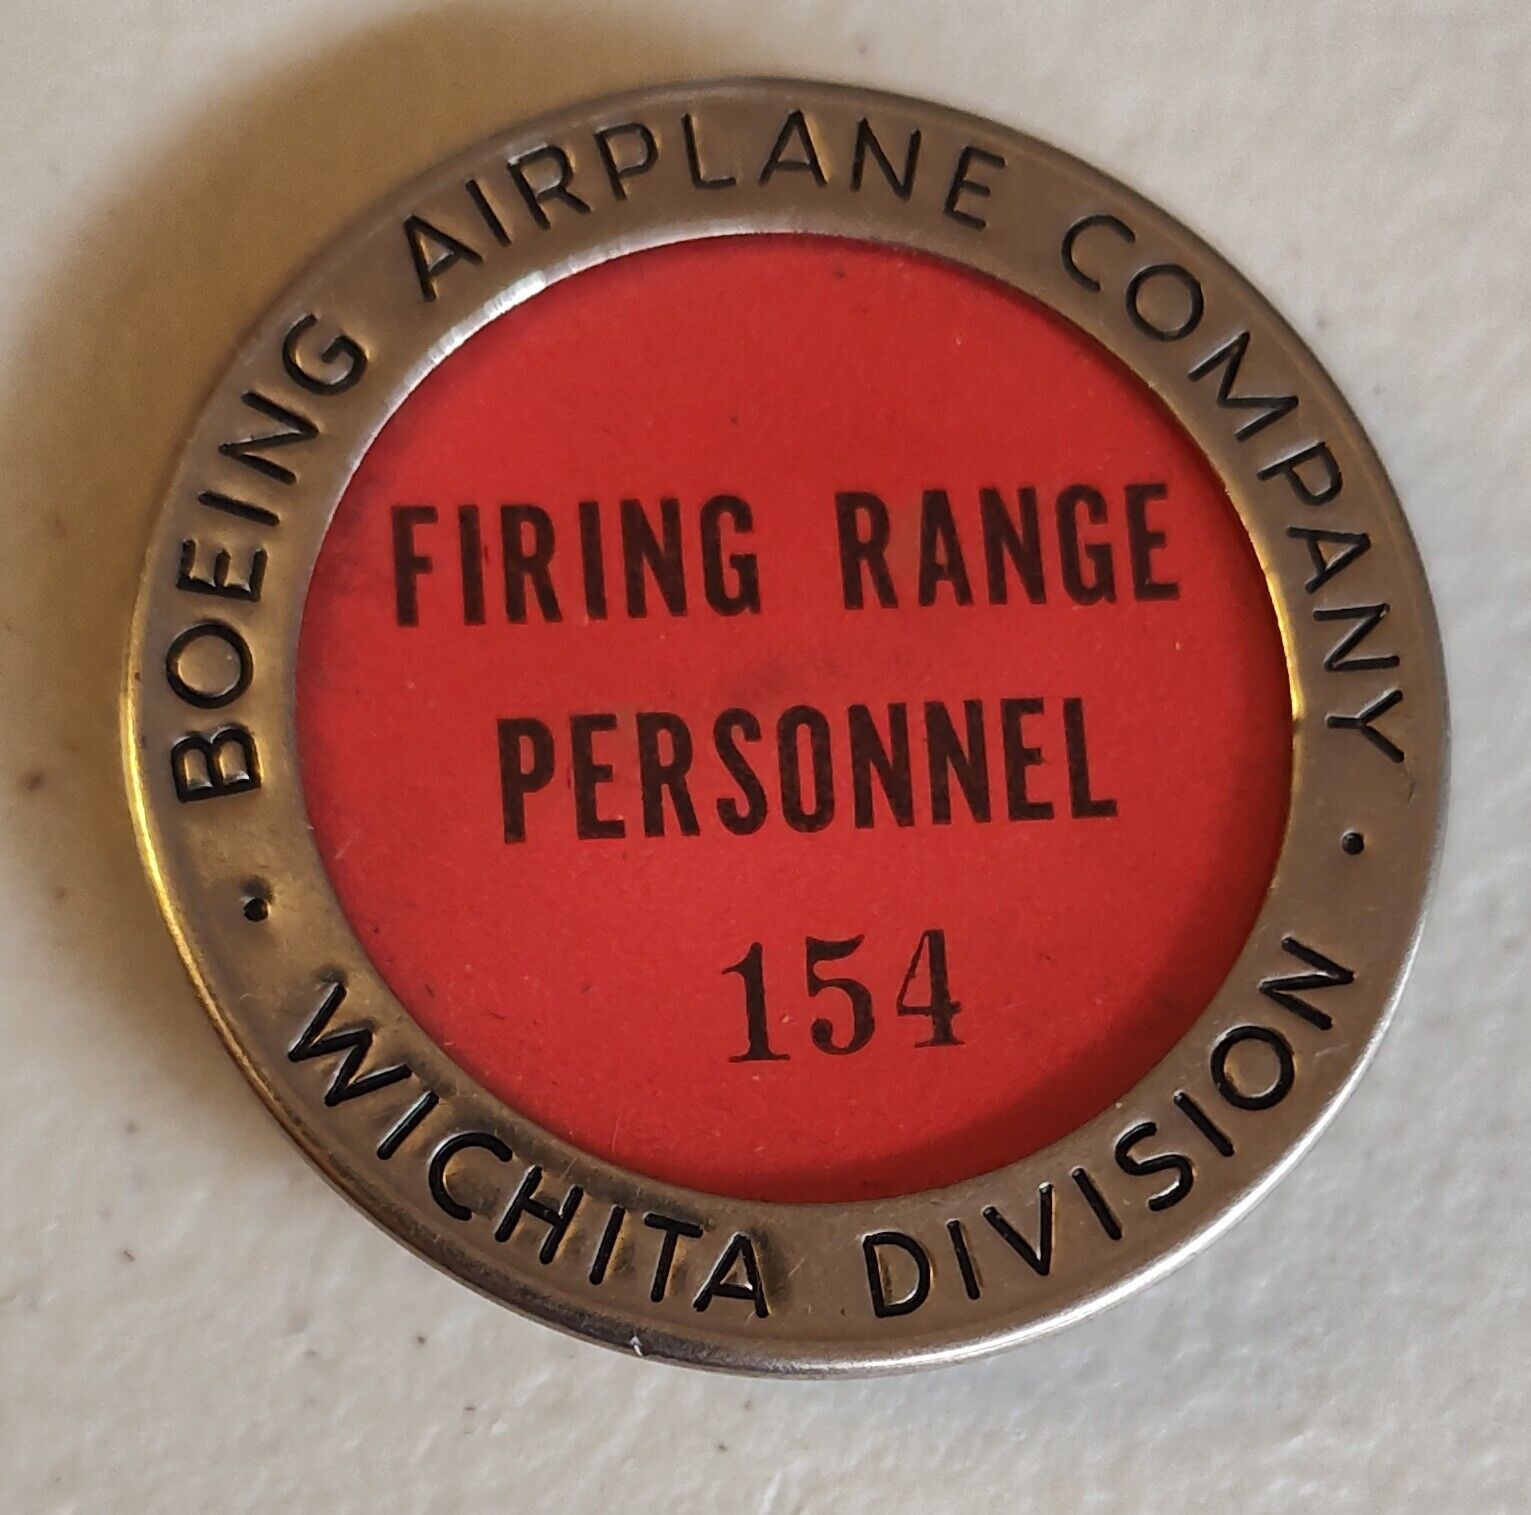 Vintage Boeing Aircraft Company - Wichita Div. firing range employee ID badge